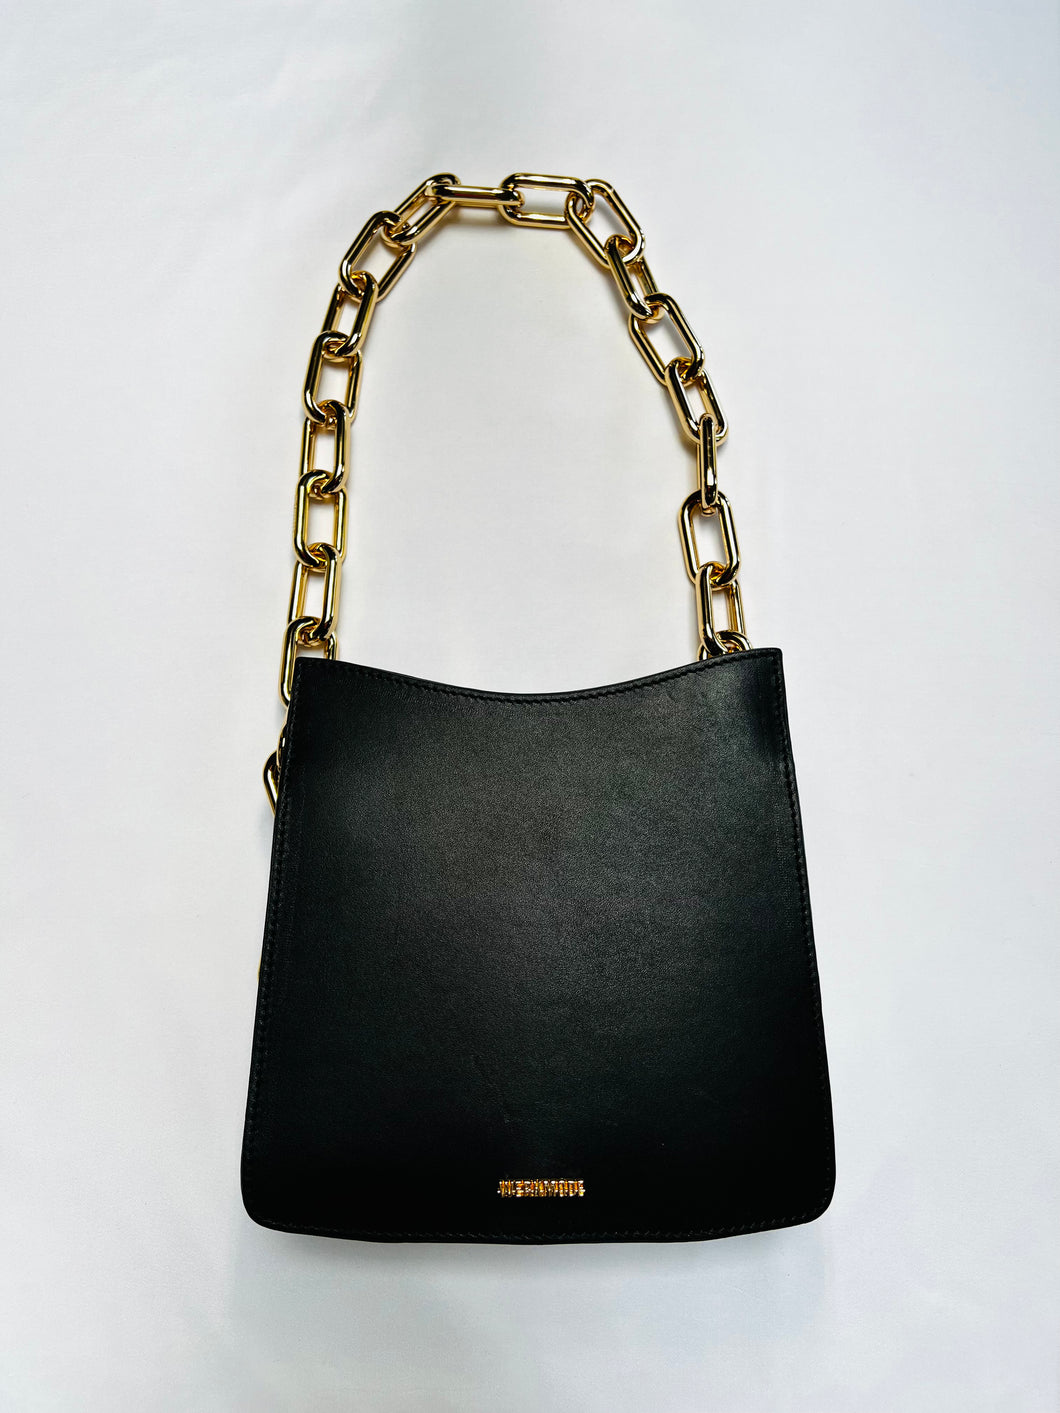 *Ducissa Leather Shoulder Bag NERO/GOLD